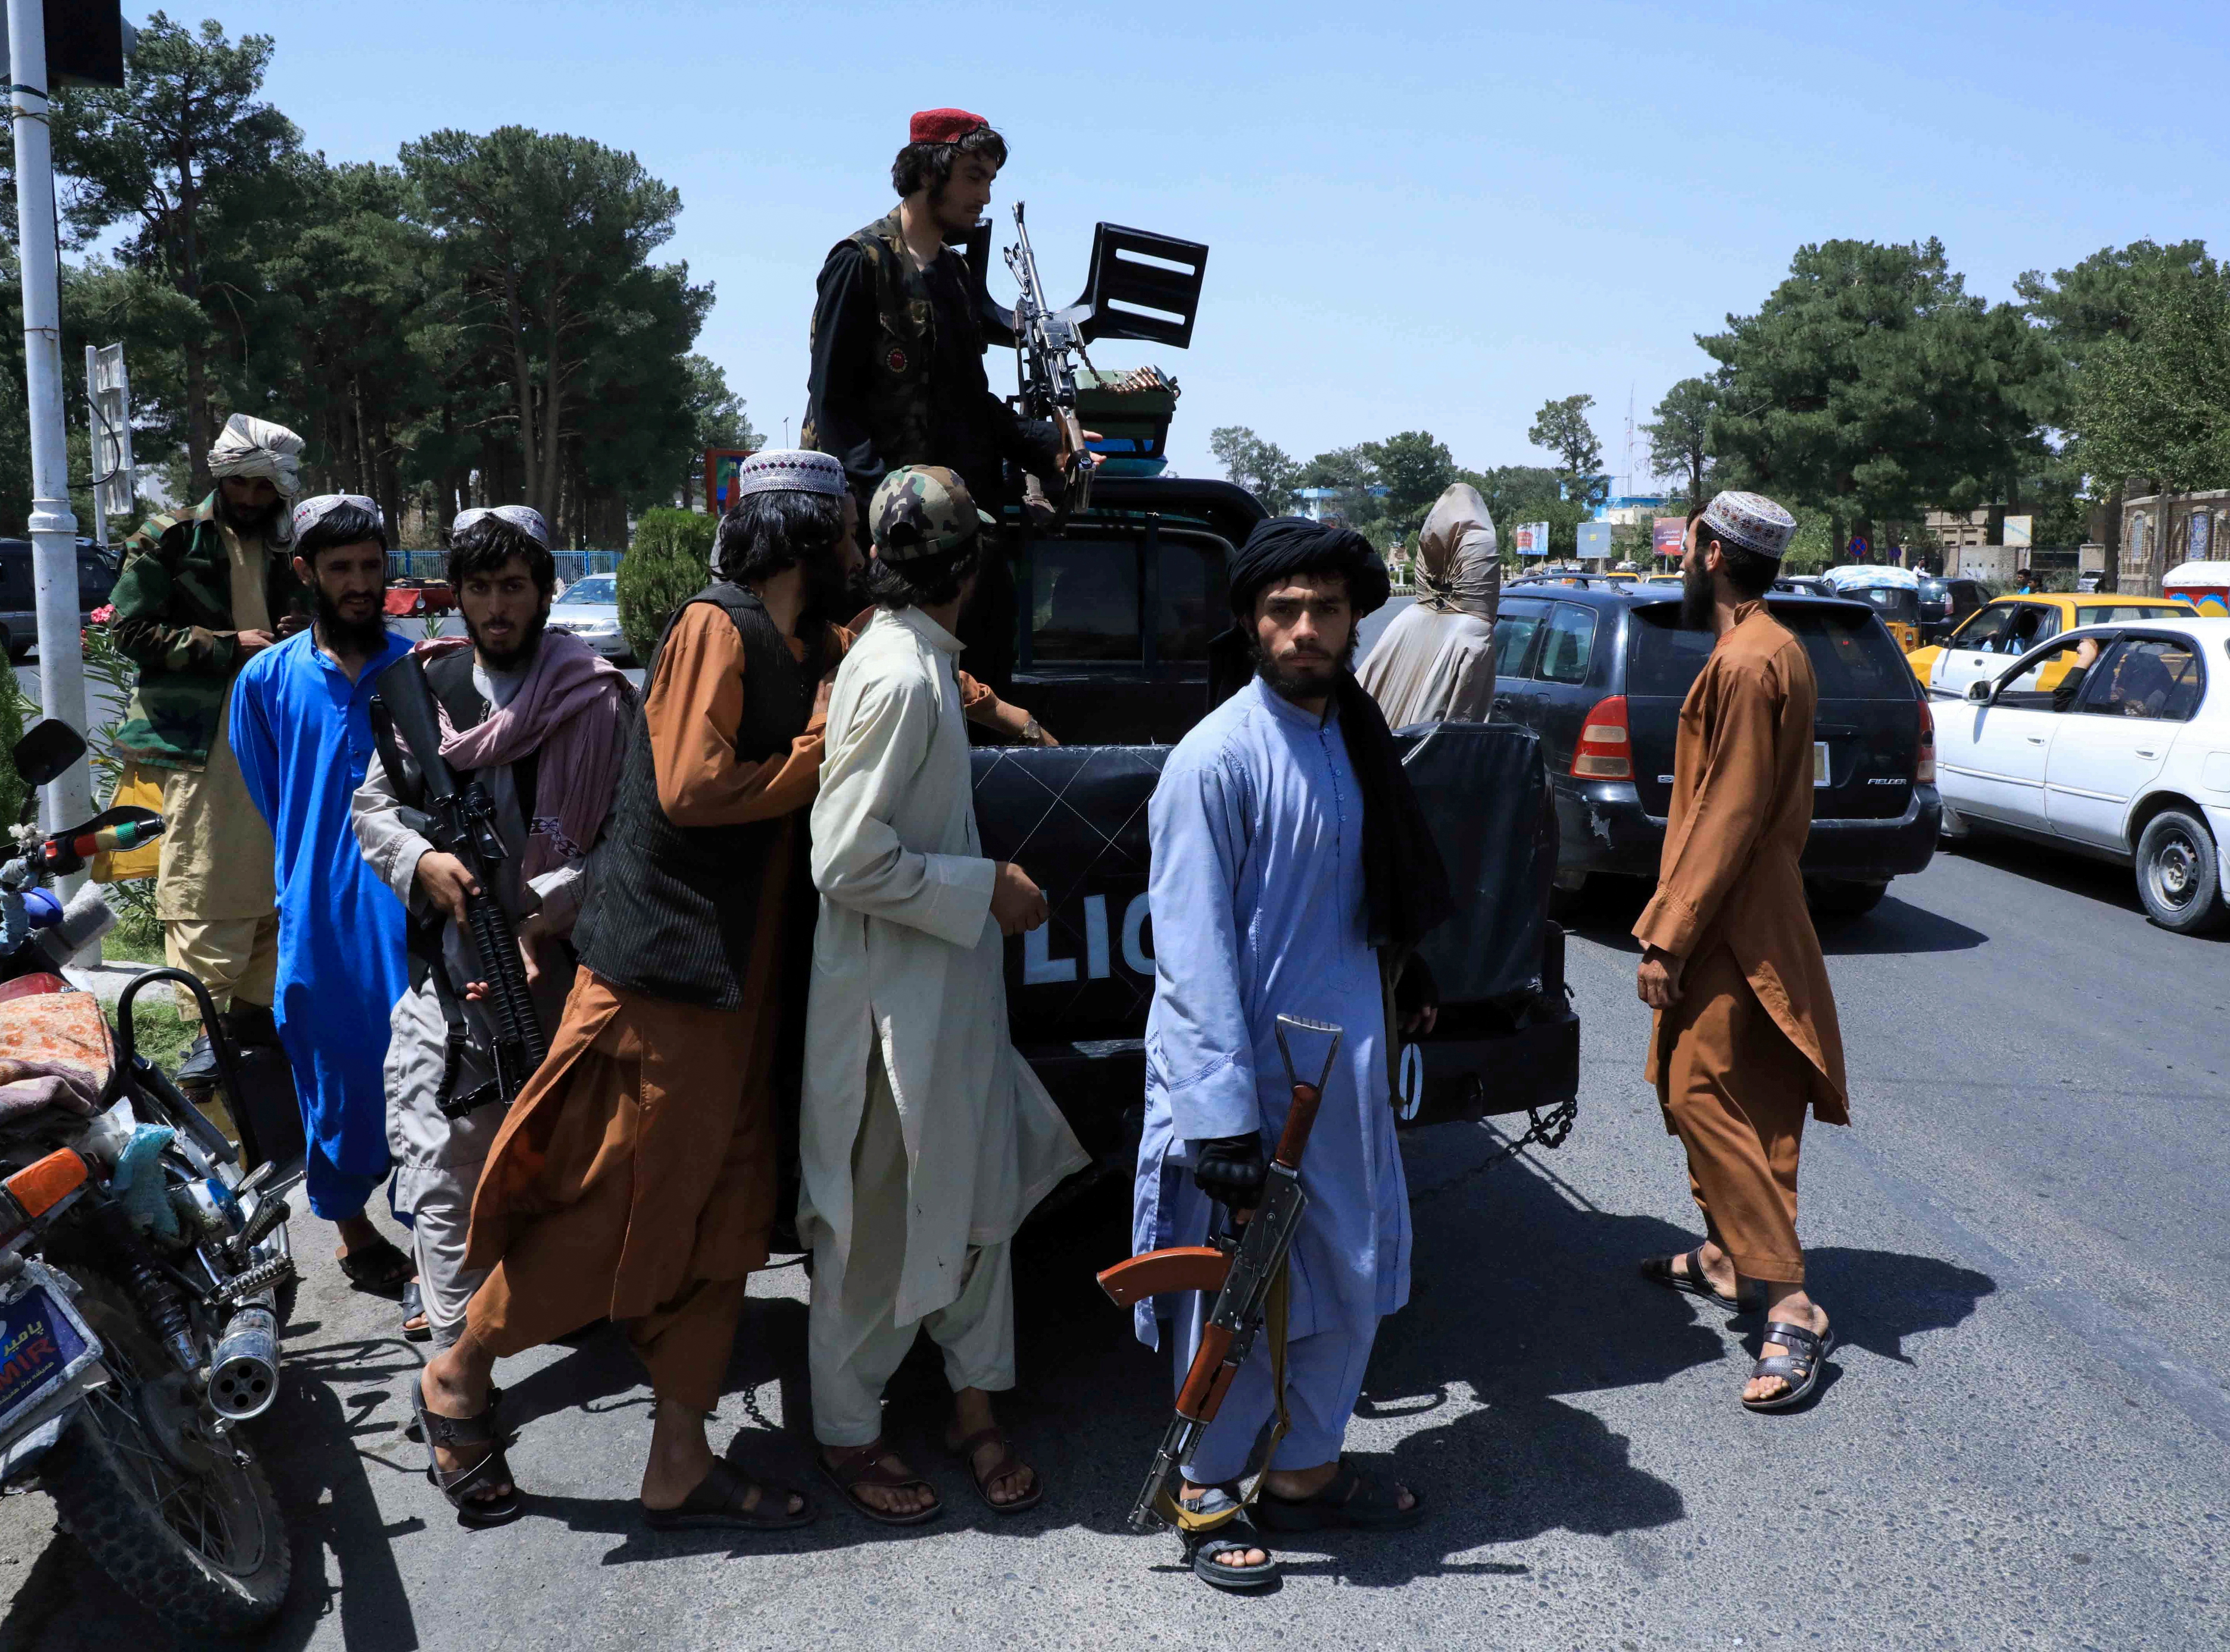 Taliban forces patrol a street in Herat